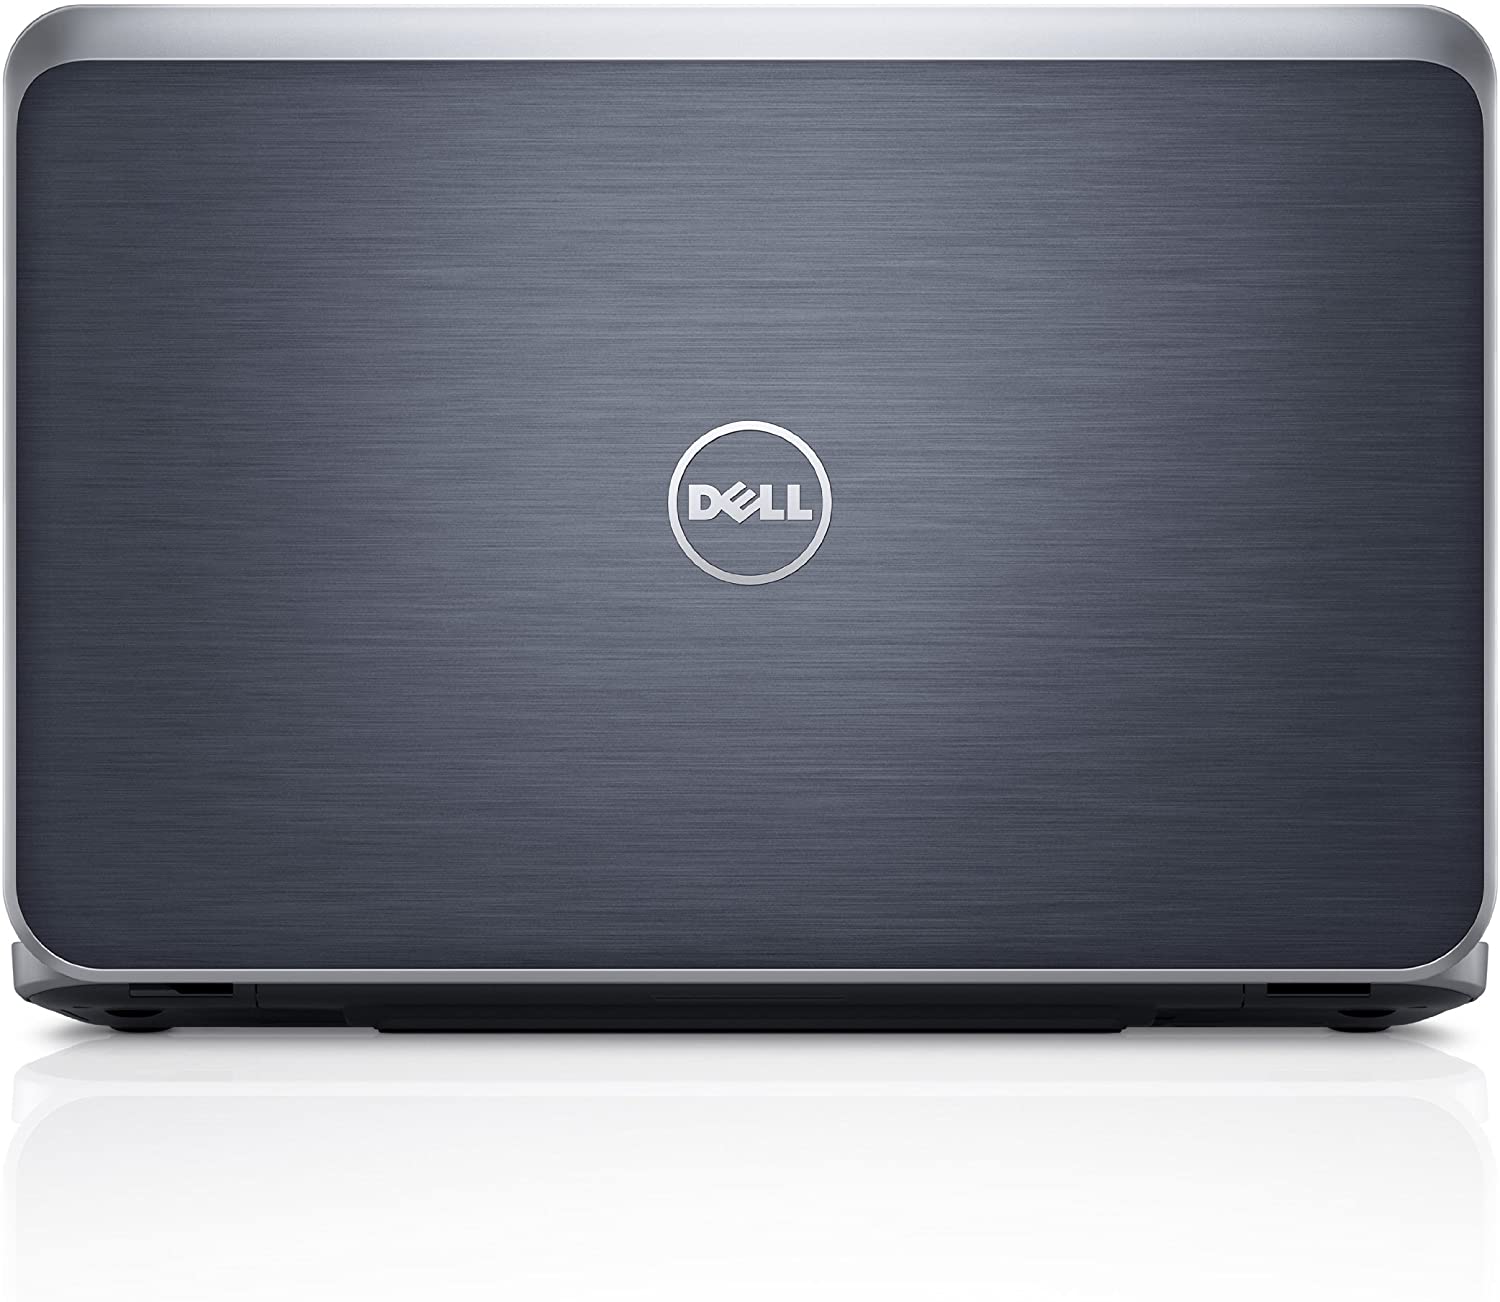 Laptop Dell Inspiron N5737  i5 4th Gen, Ram 6Gb, Disco HDD 1Tb, Display 17” , con Dvd writer, Webcam, Renovada